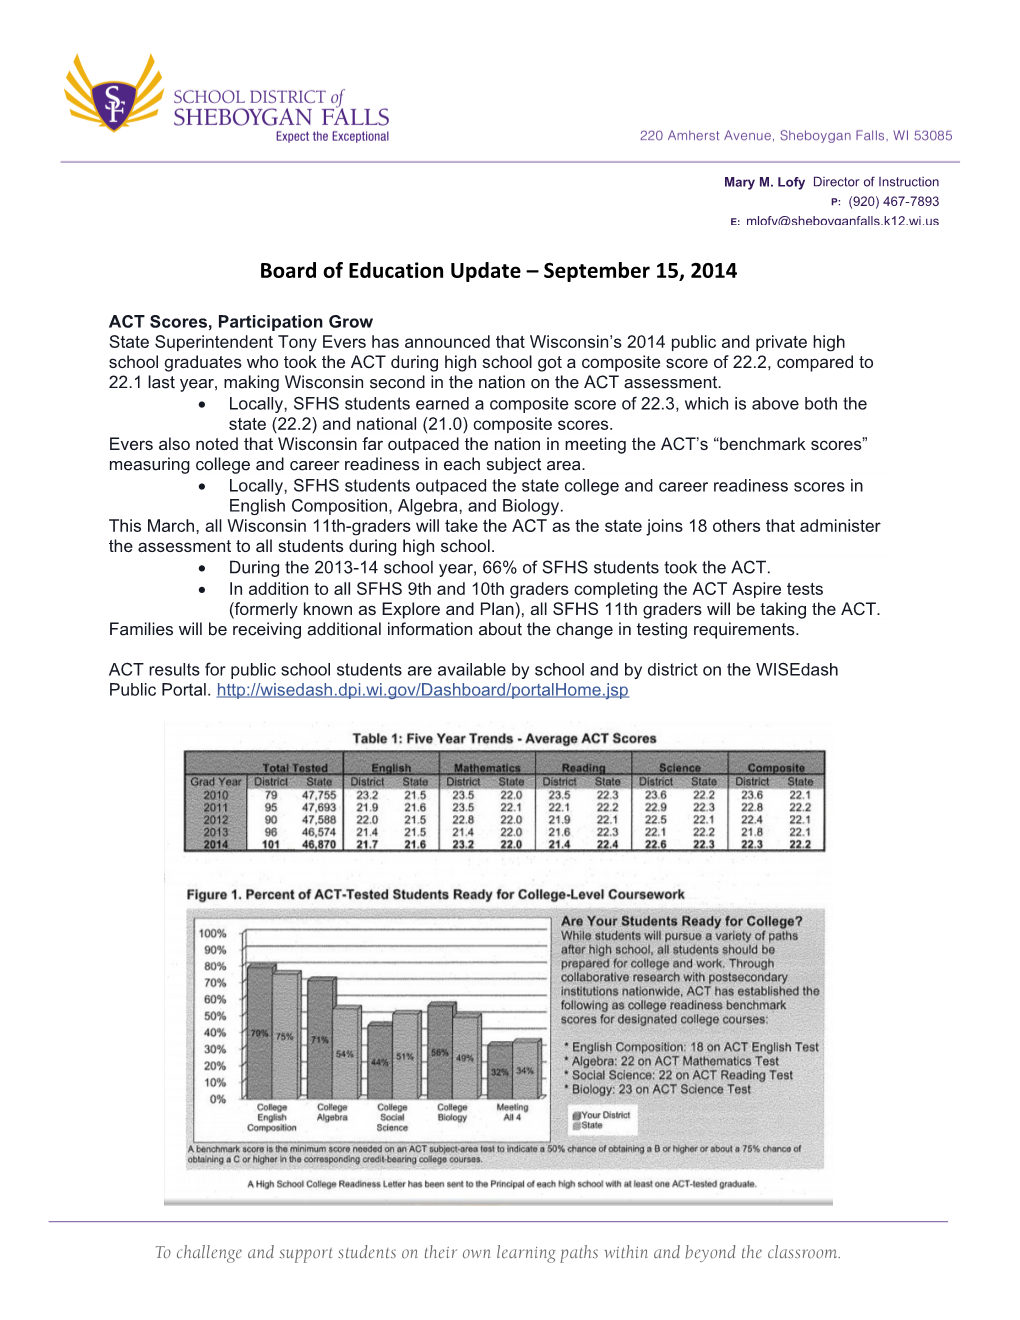 Board of Education Update September 15, 2014